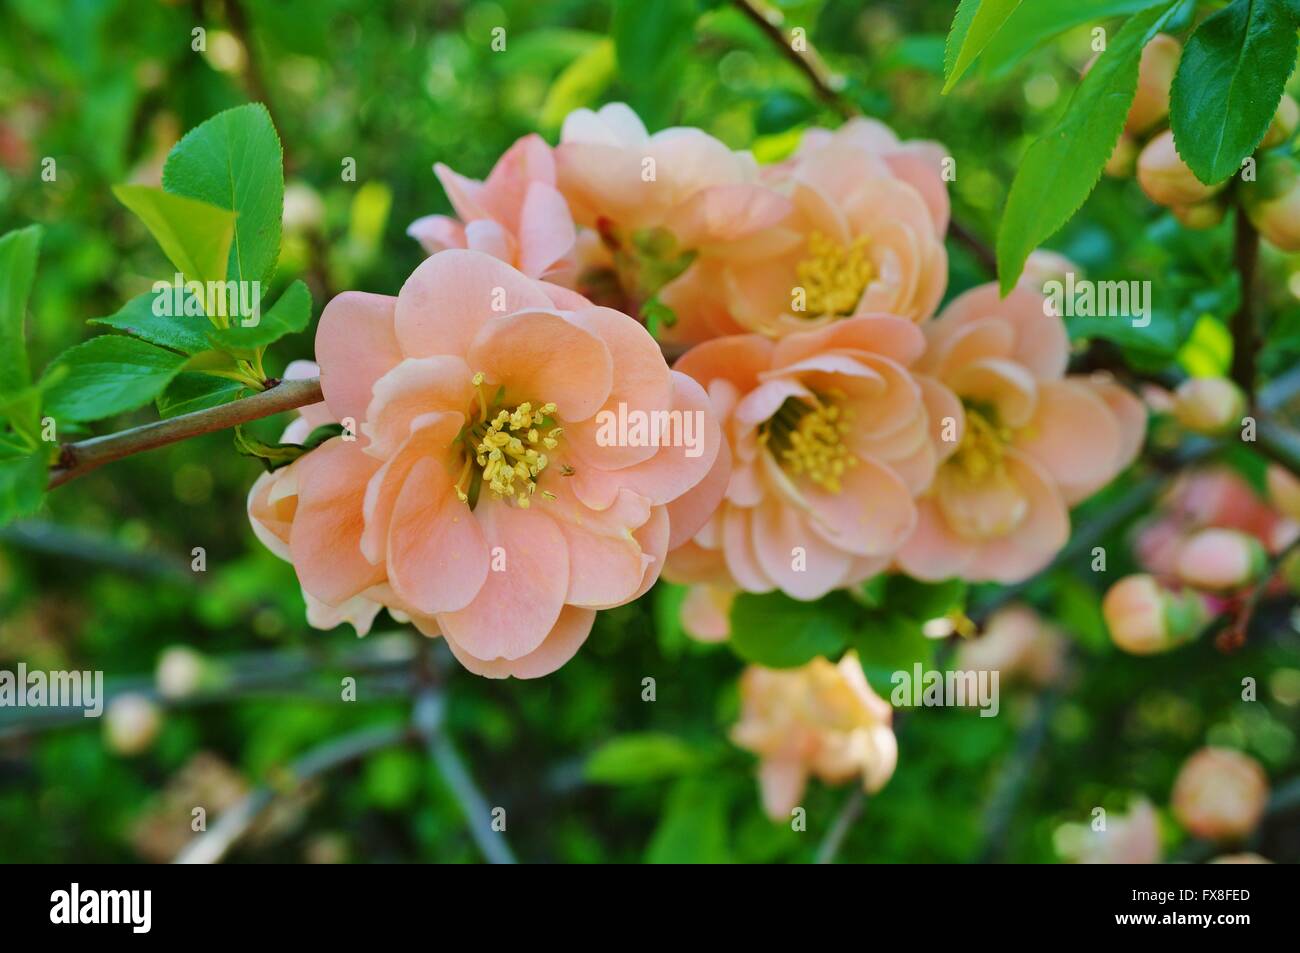 Apricot orange blooms of flowering quince chaenomeles shrub Stock Photo